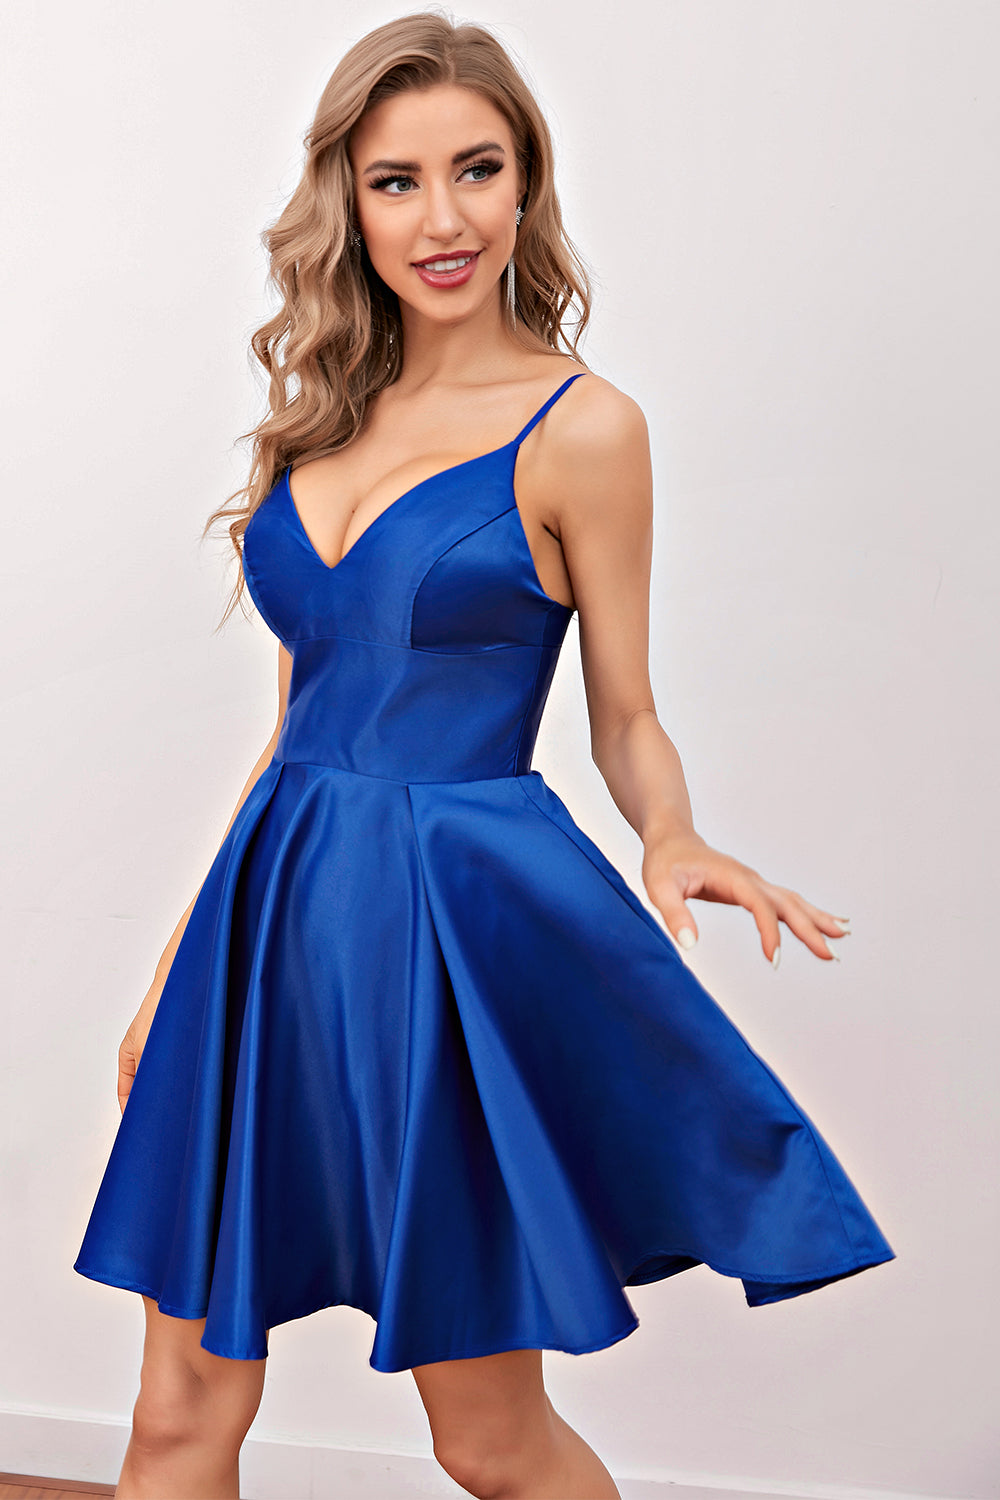 Royal Blue Short Prom Homecoming Dress